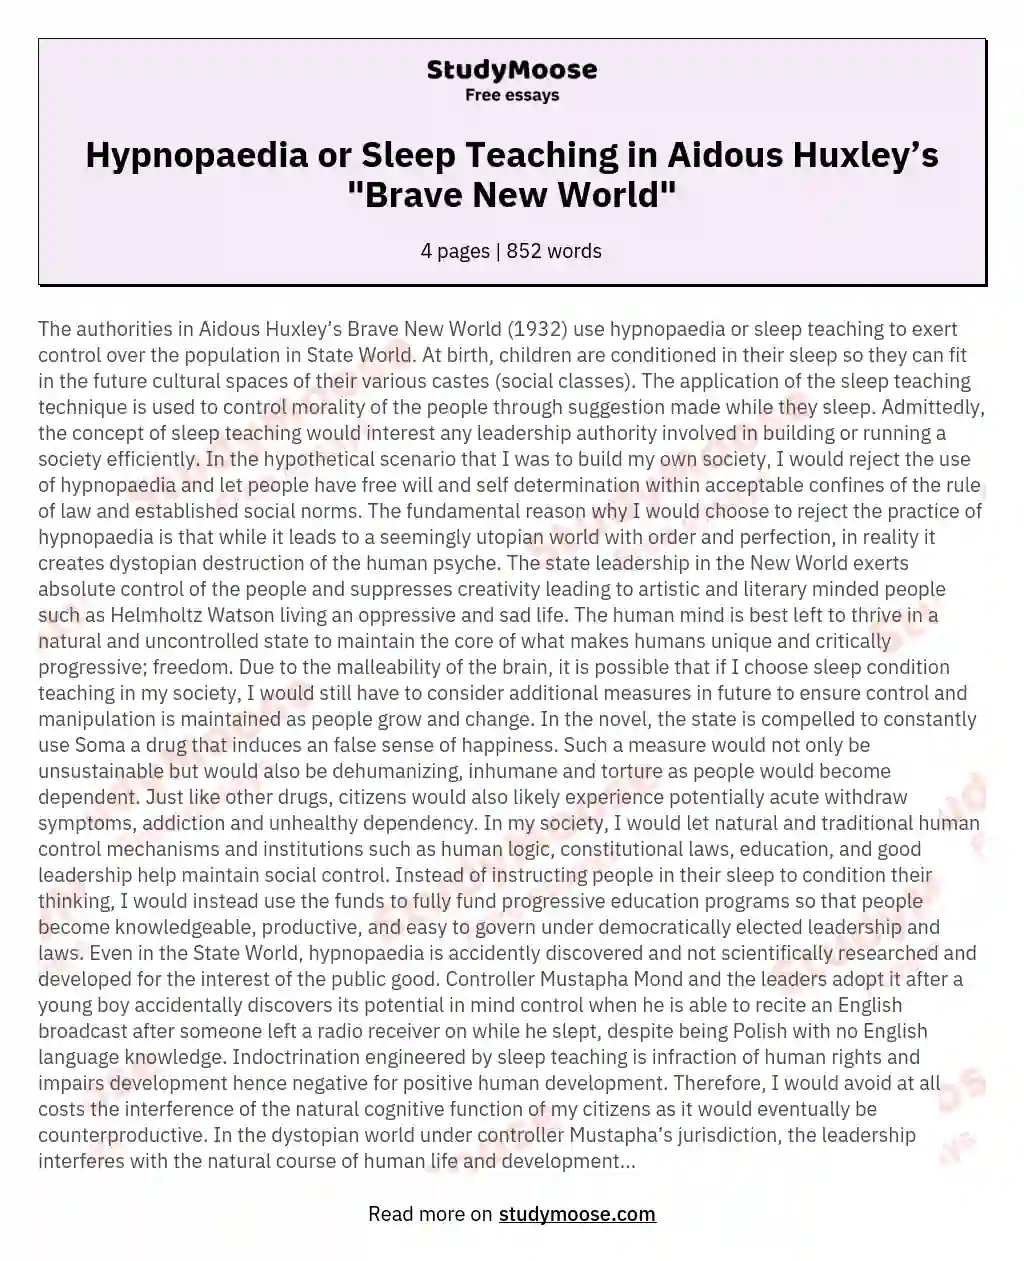 Hypnopaedia or Sleep Teaching in Aidous Huxley’s "Brave New World"